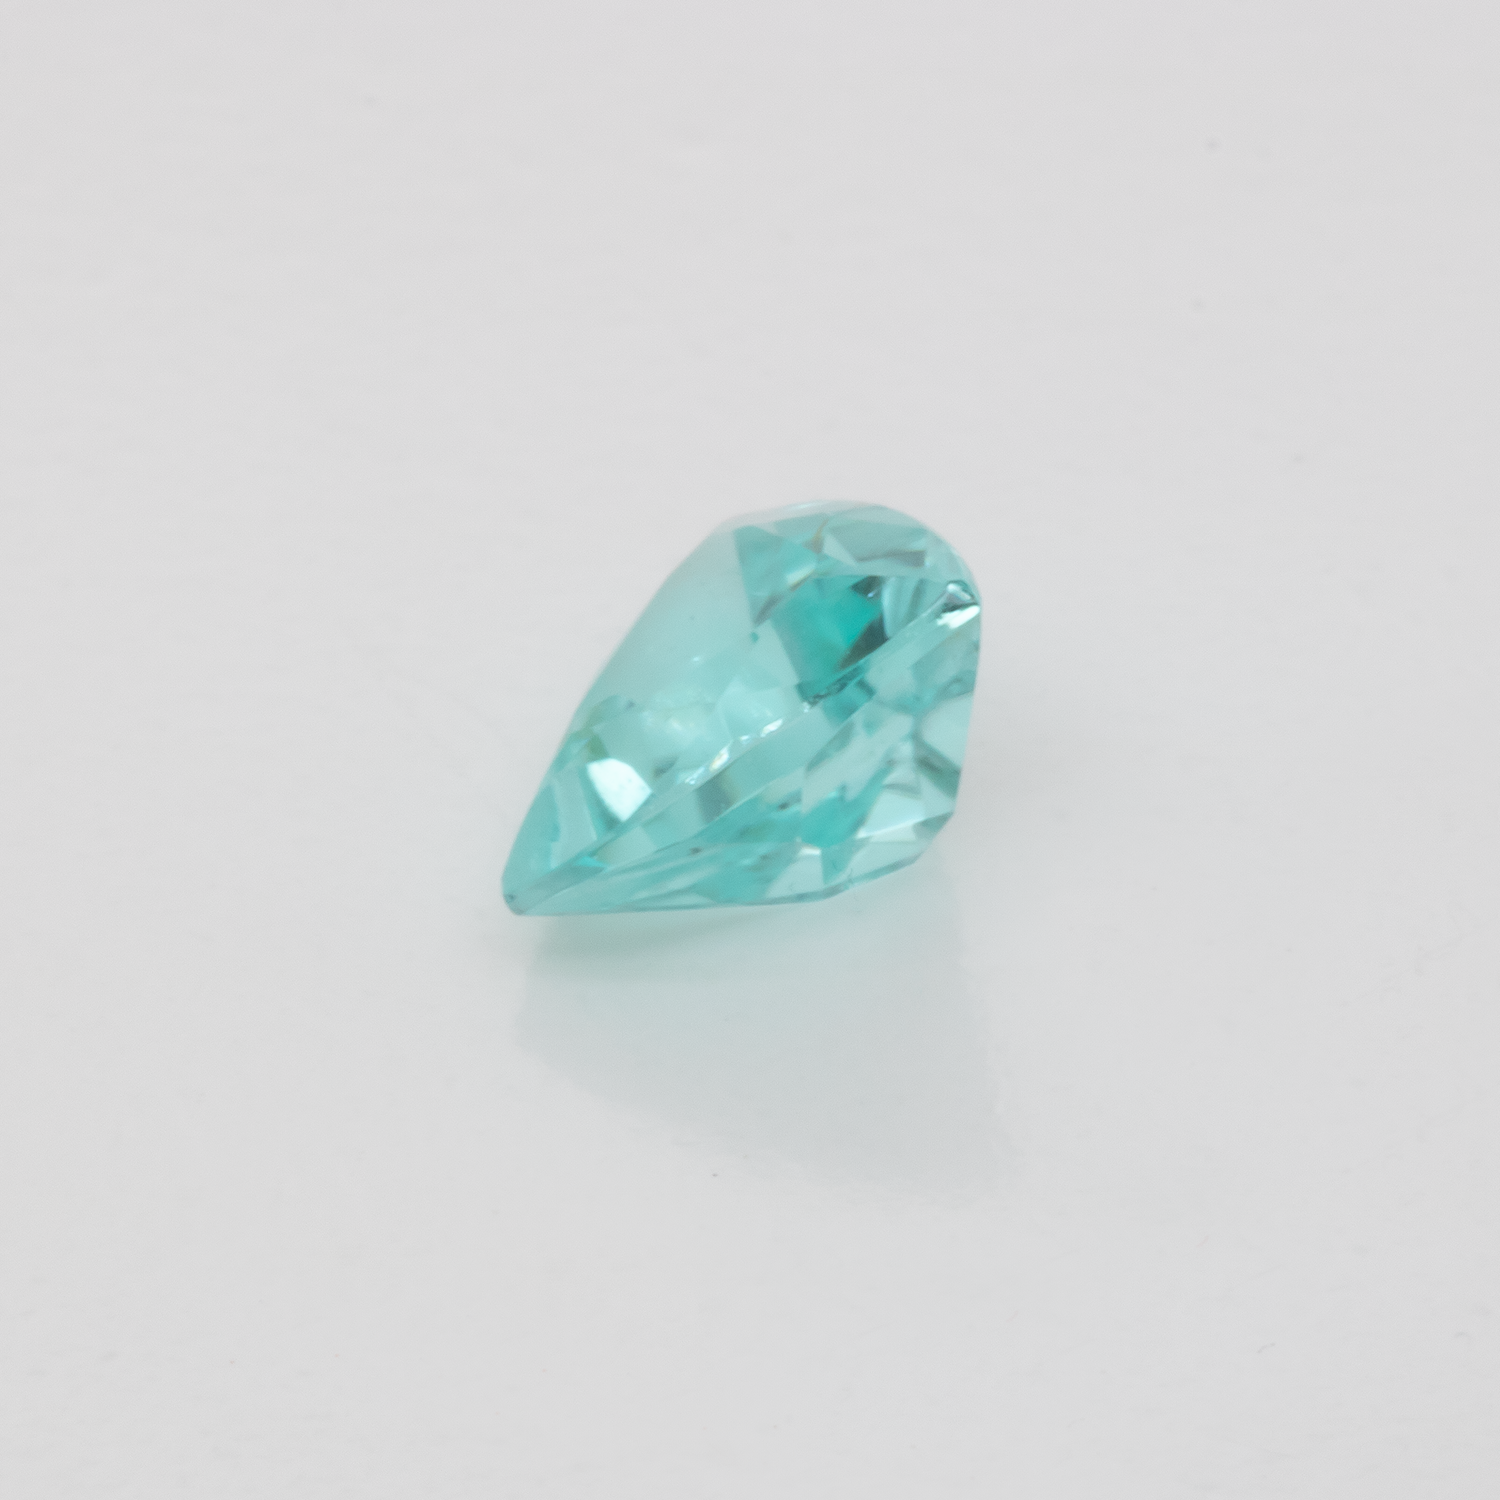 Paraiba Tourmaline - blue, trillion, 5x5.1 mm, 0.43 cts, No. PT90017